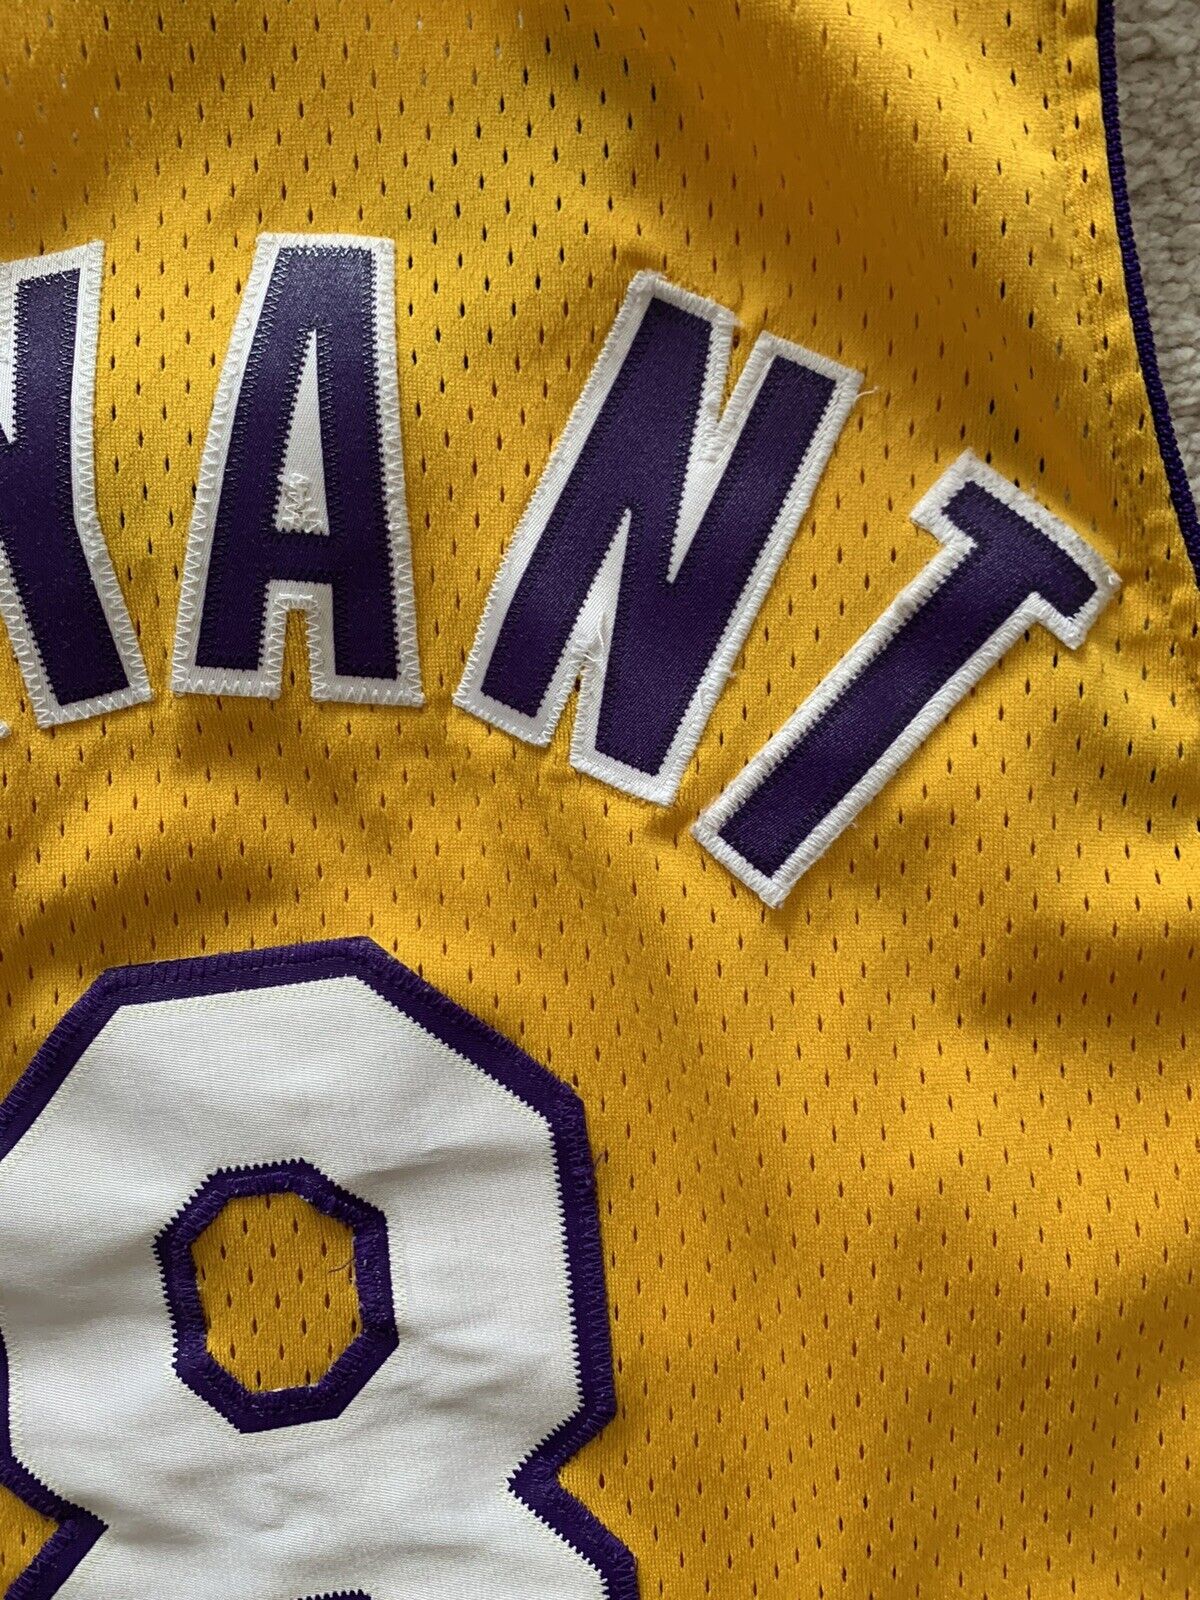 Nike Kobe Bryant Icon Edition Swingman Lakers Jersey Men Yellow AQ2109-728